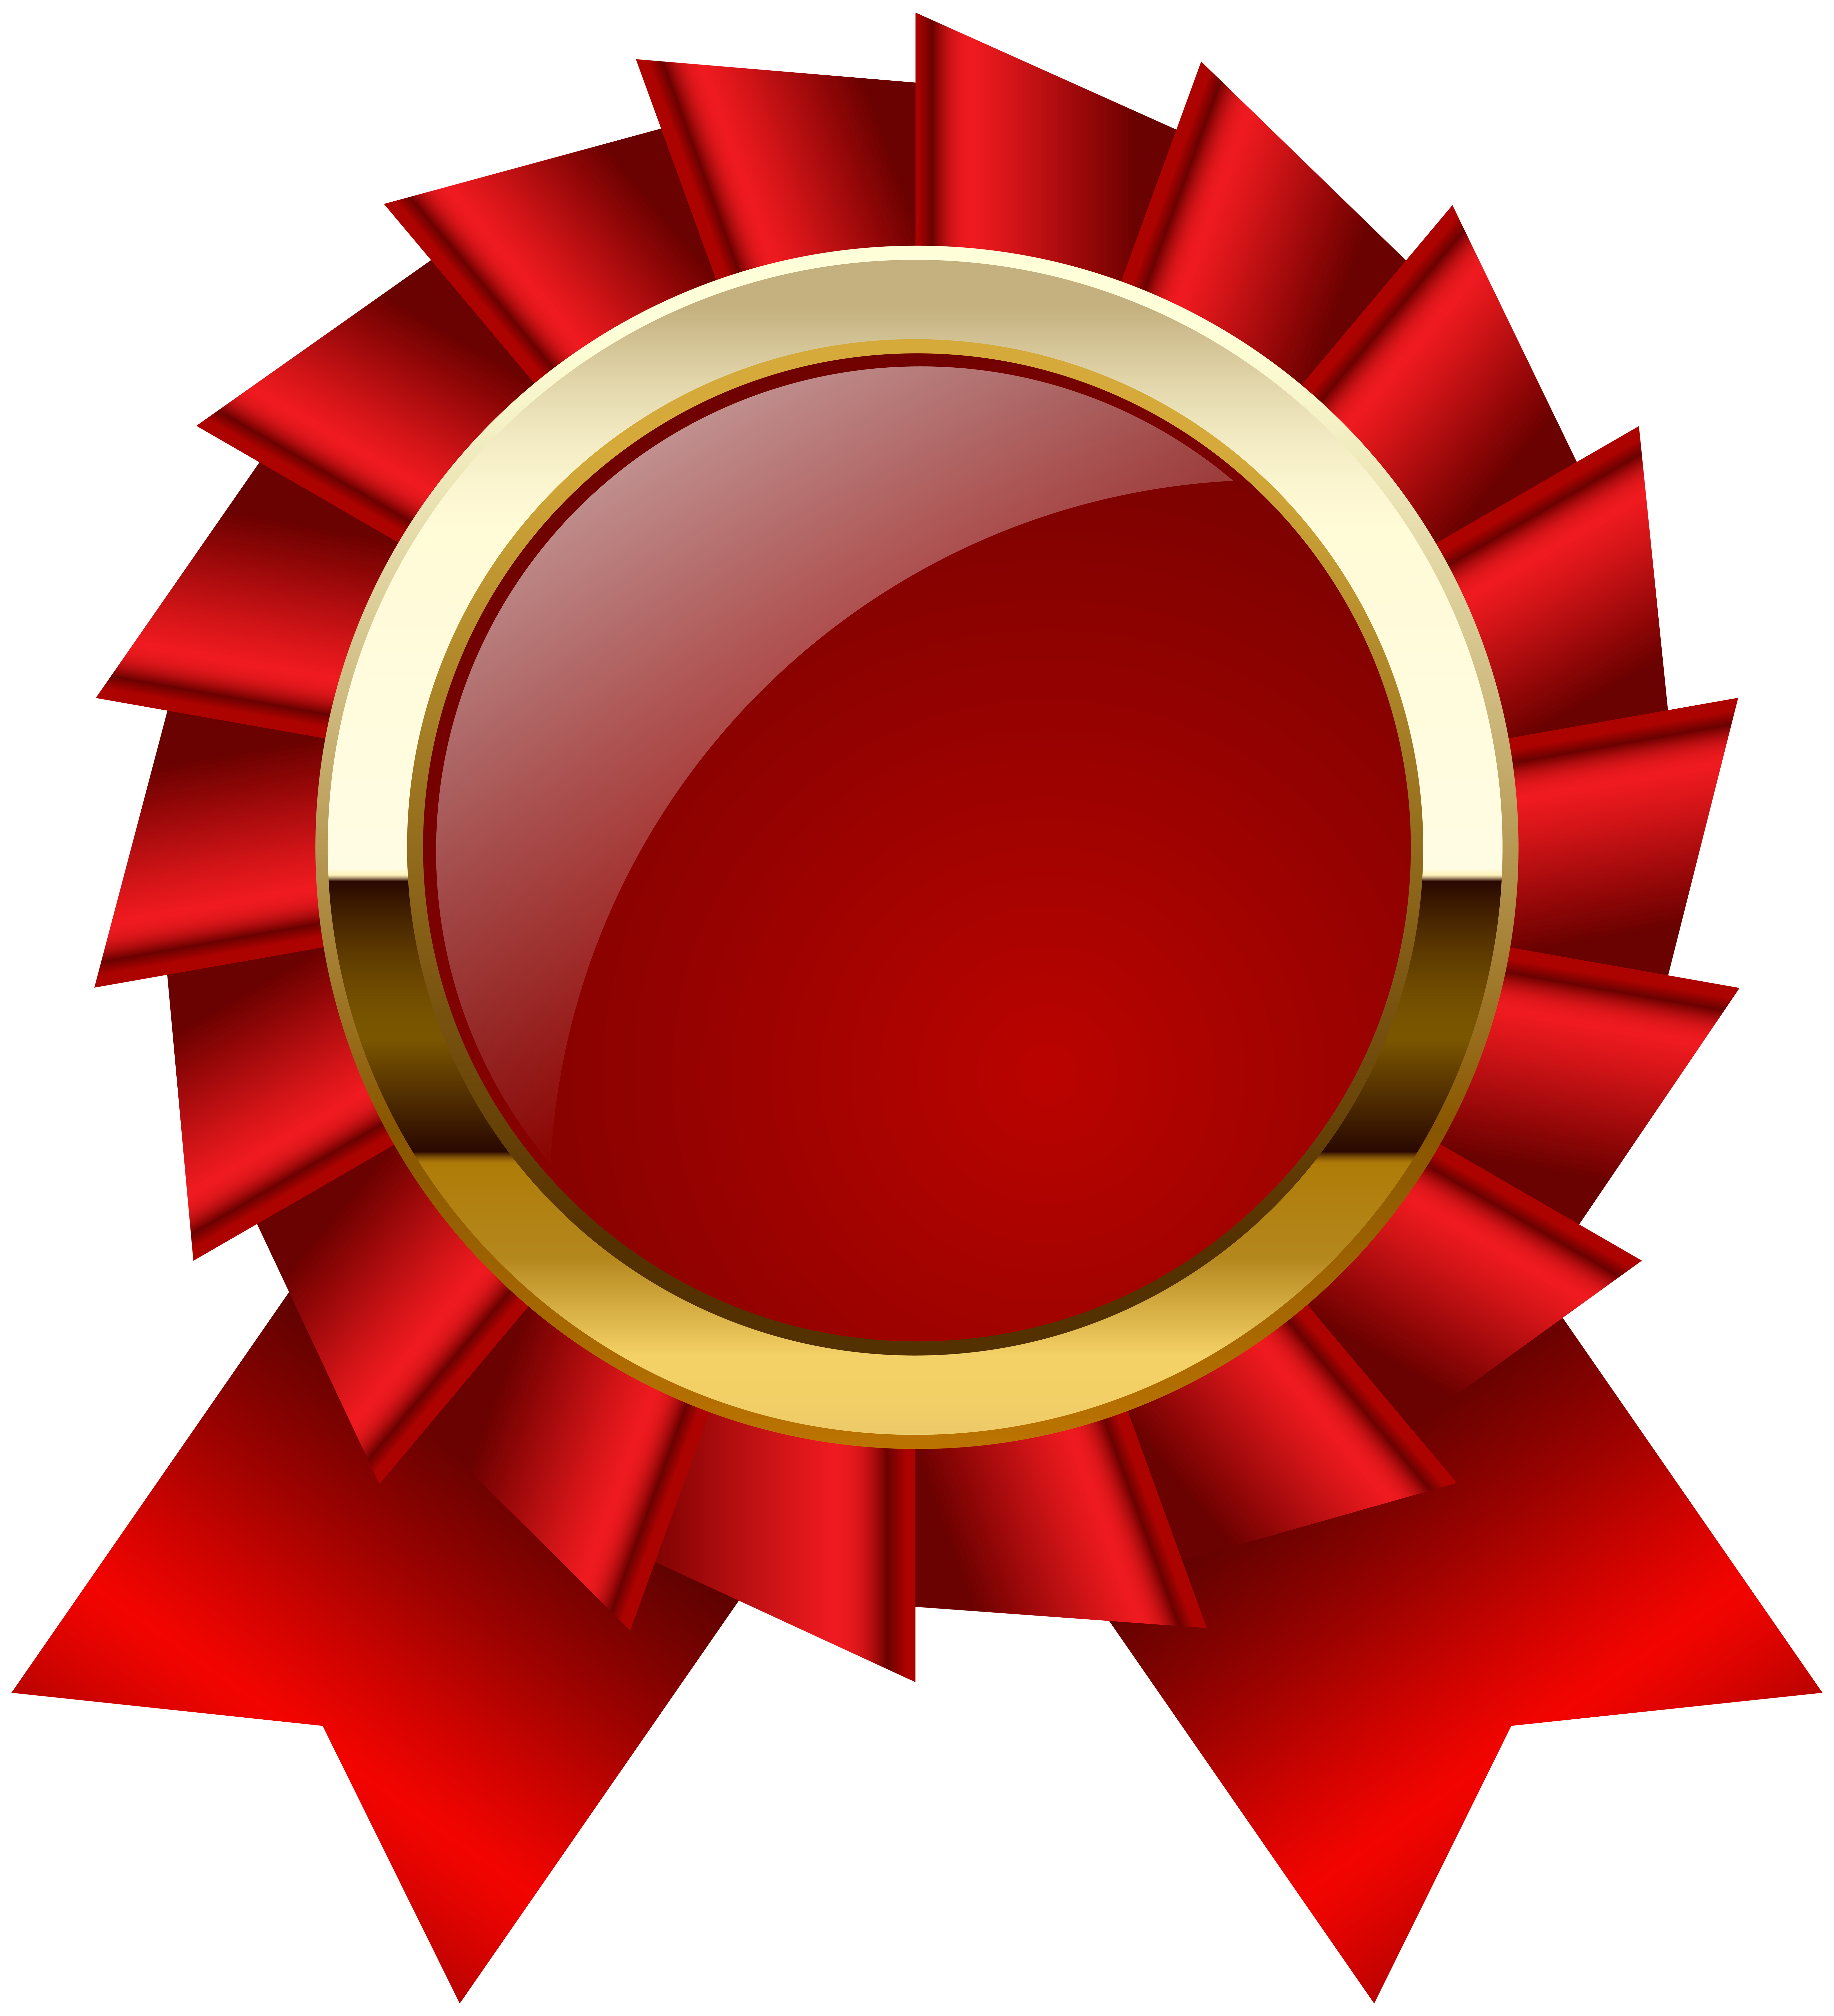 Award Rosette Ribbon PNG Clipar Image